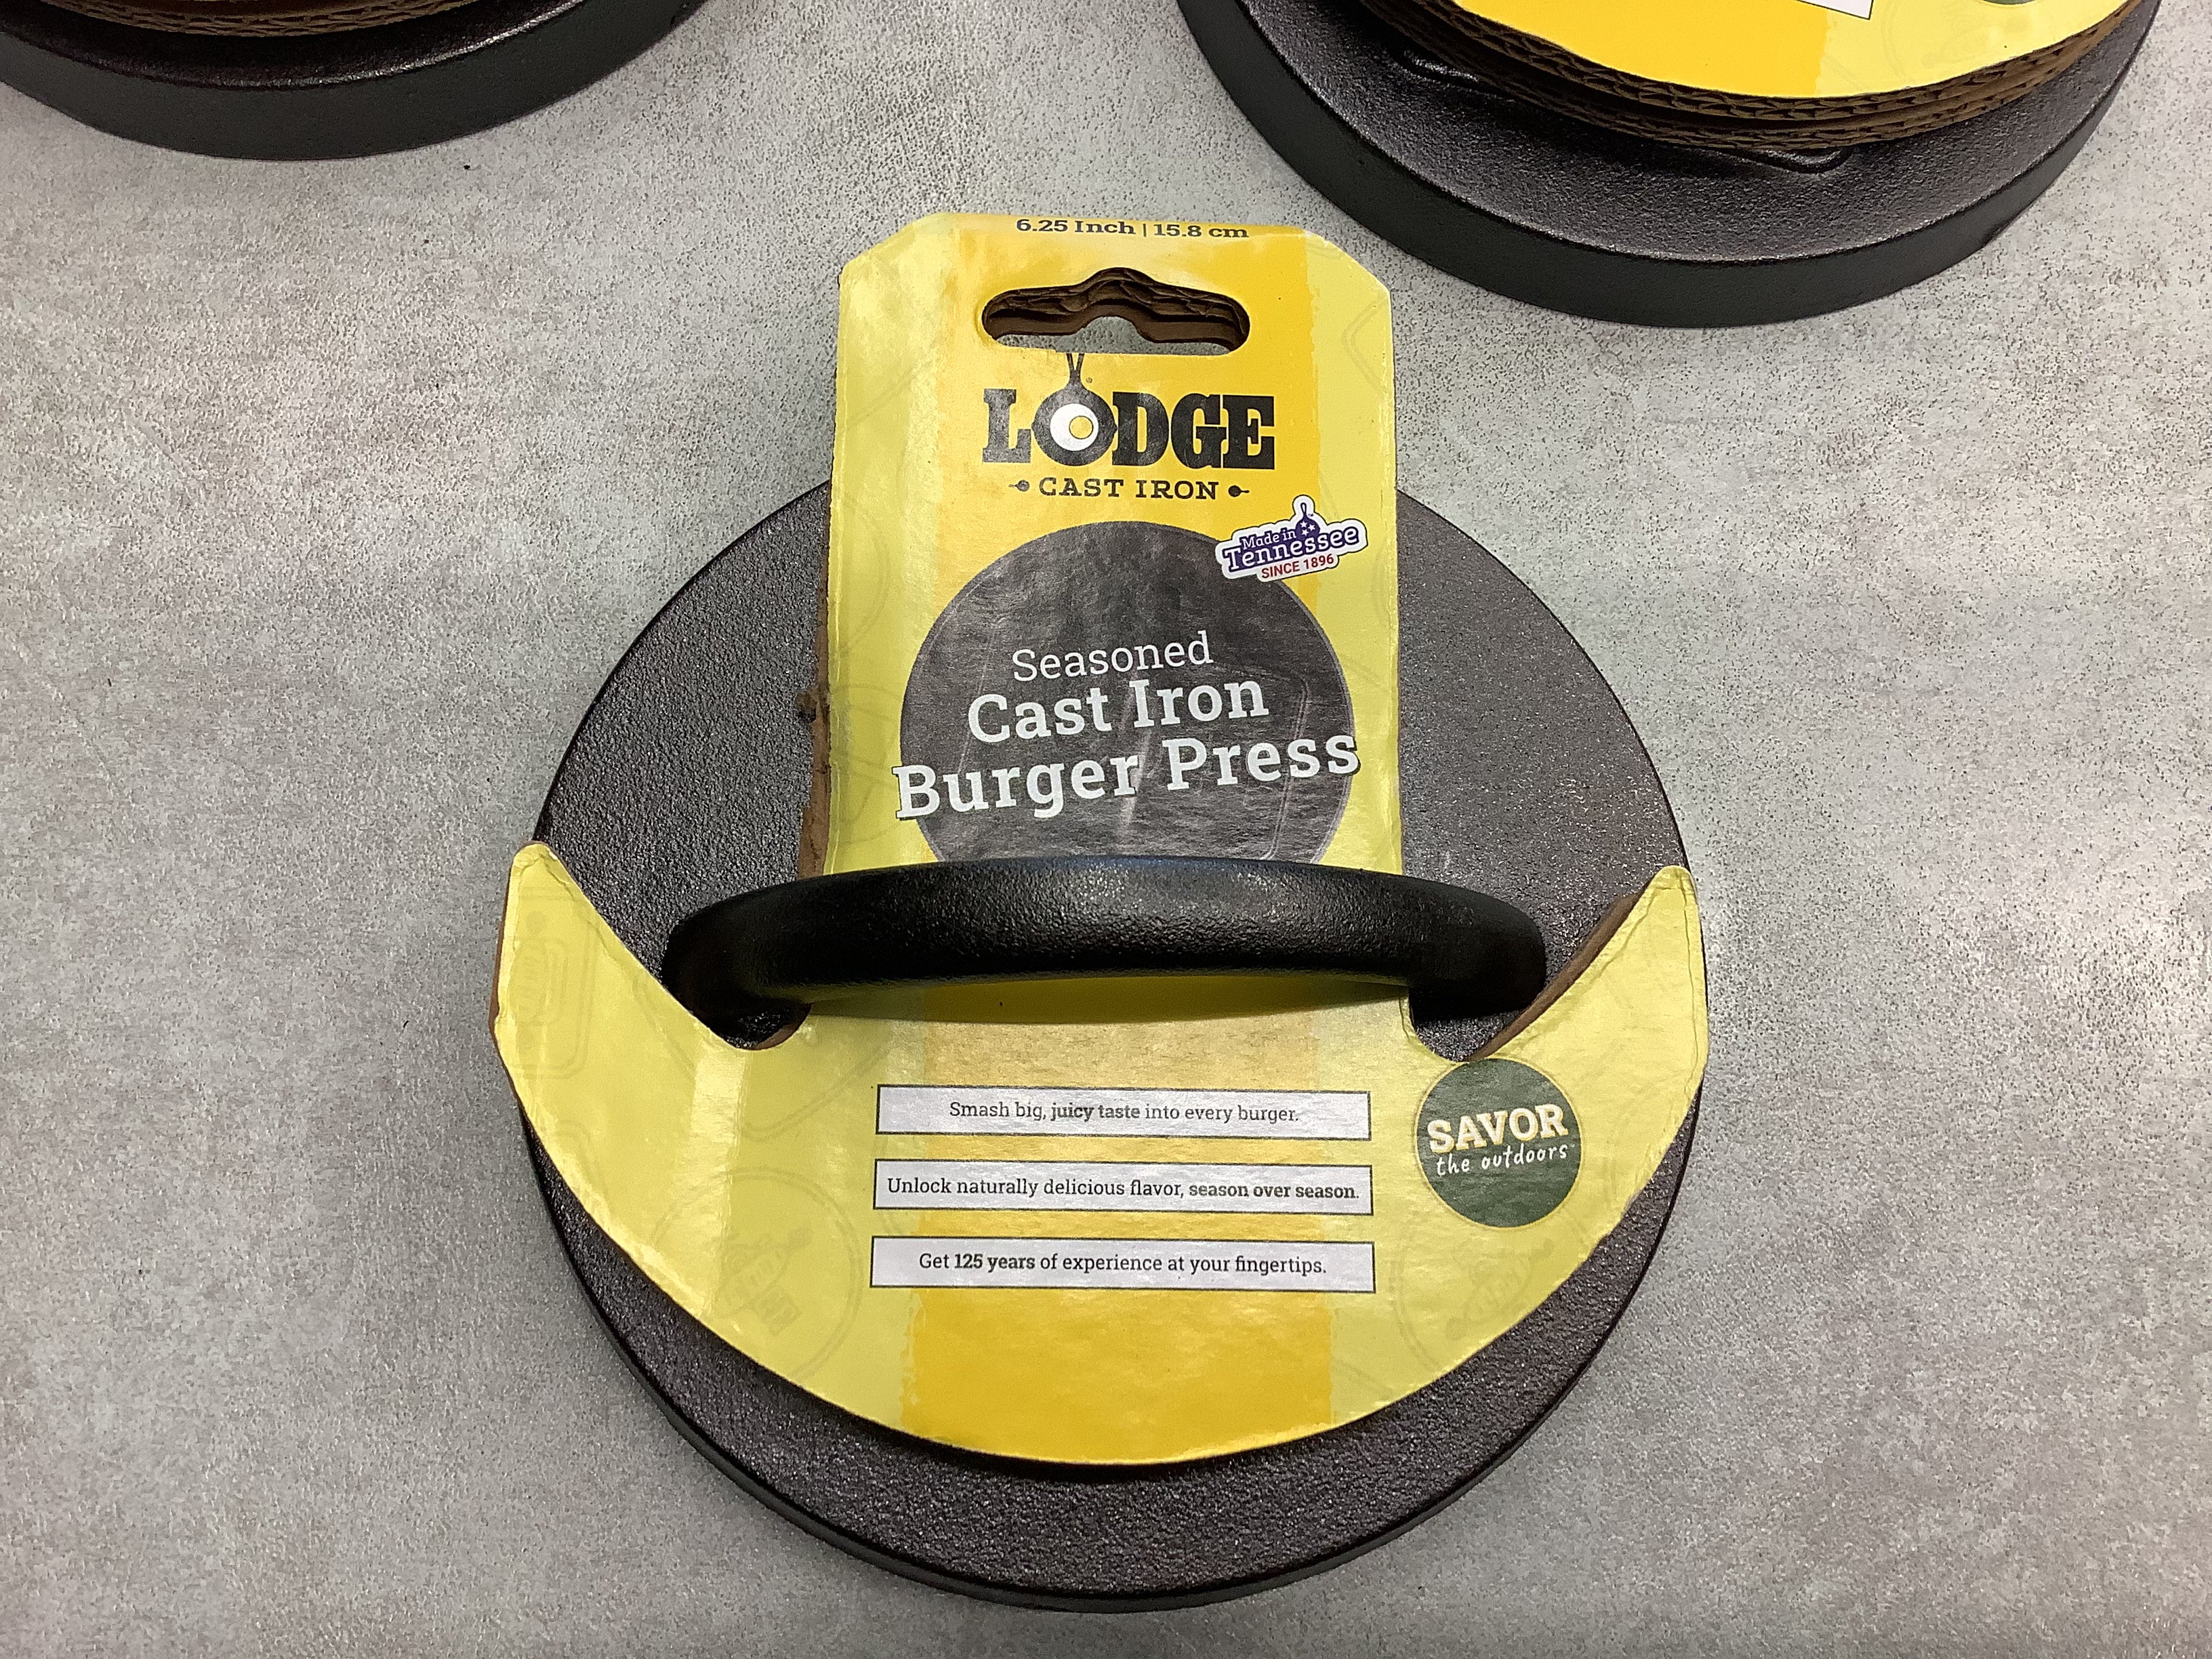 Lodge Cast Iron Burger Press, 6.25